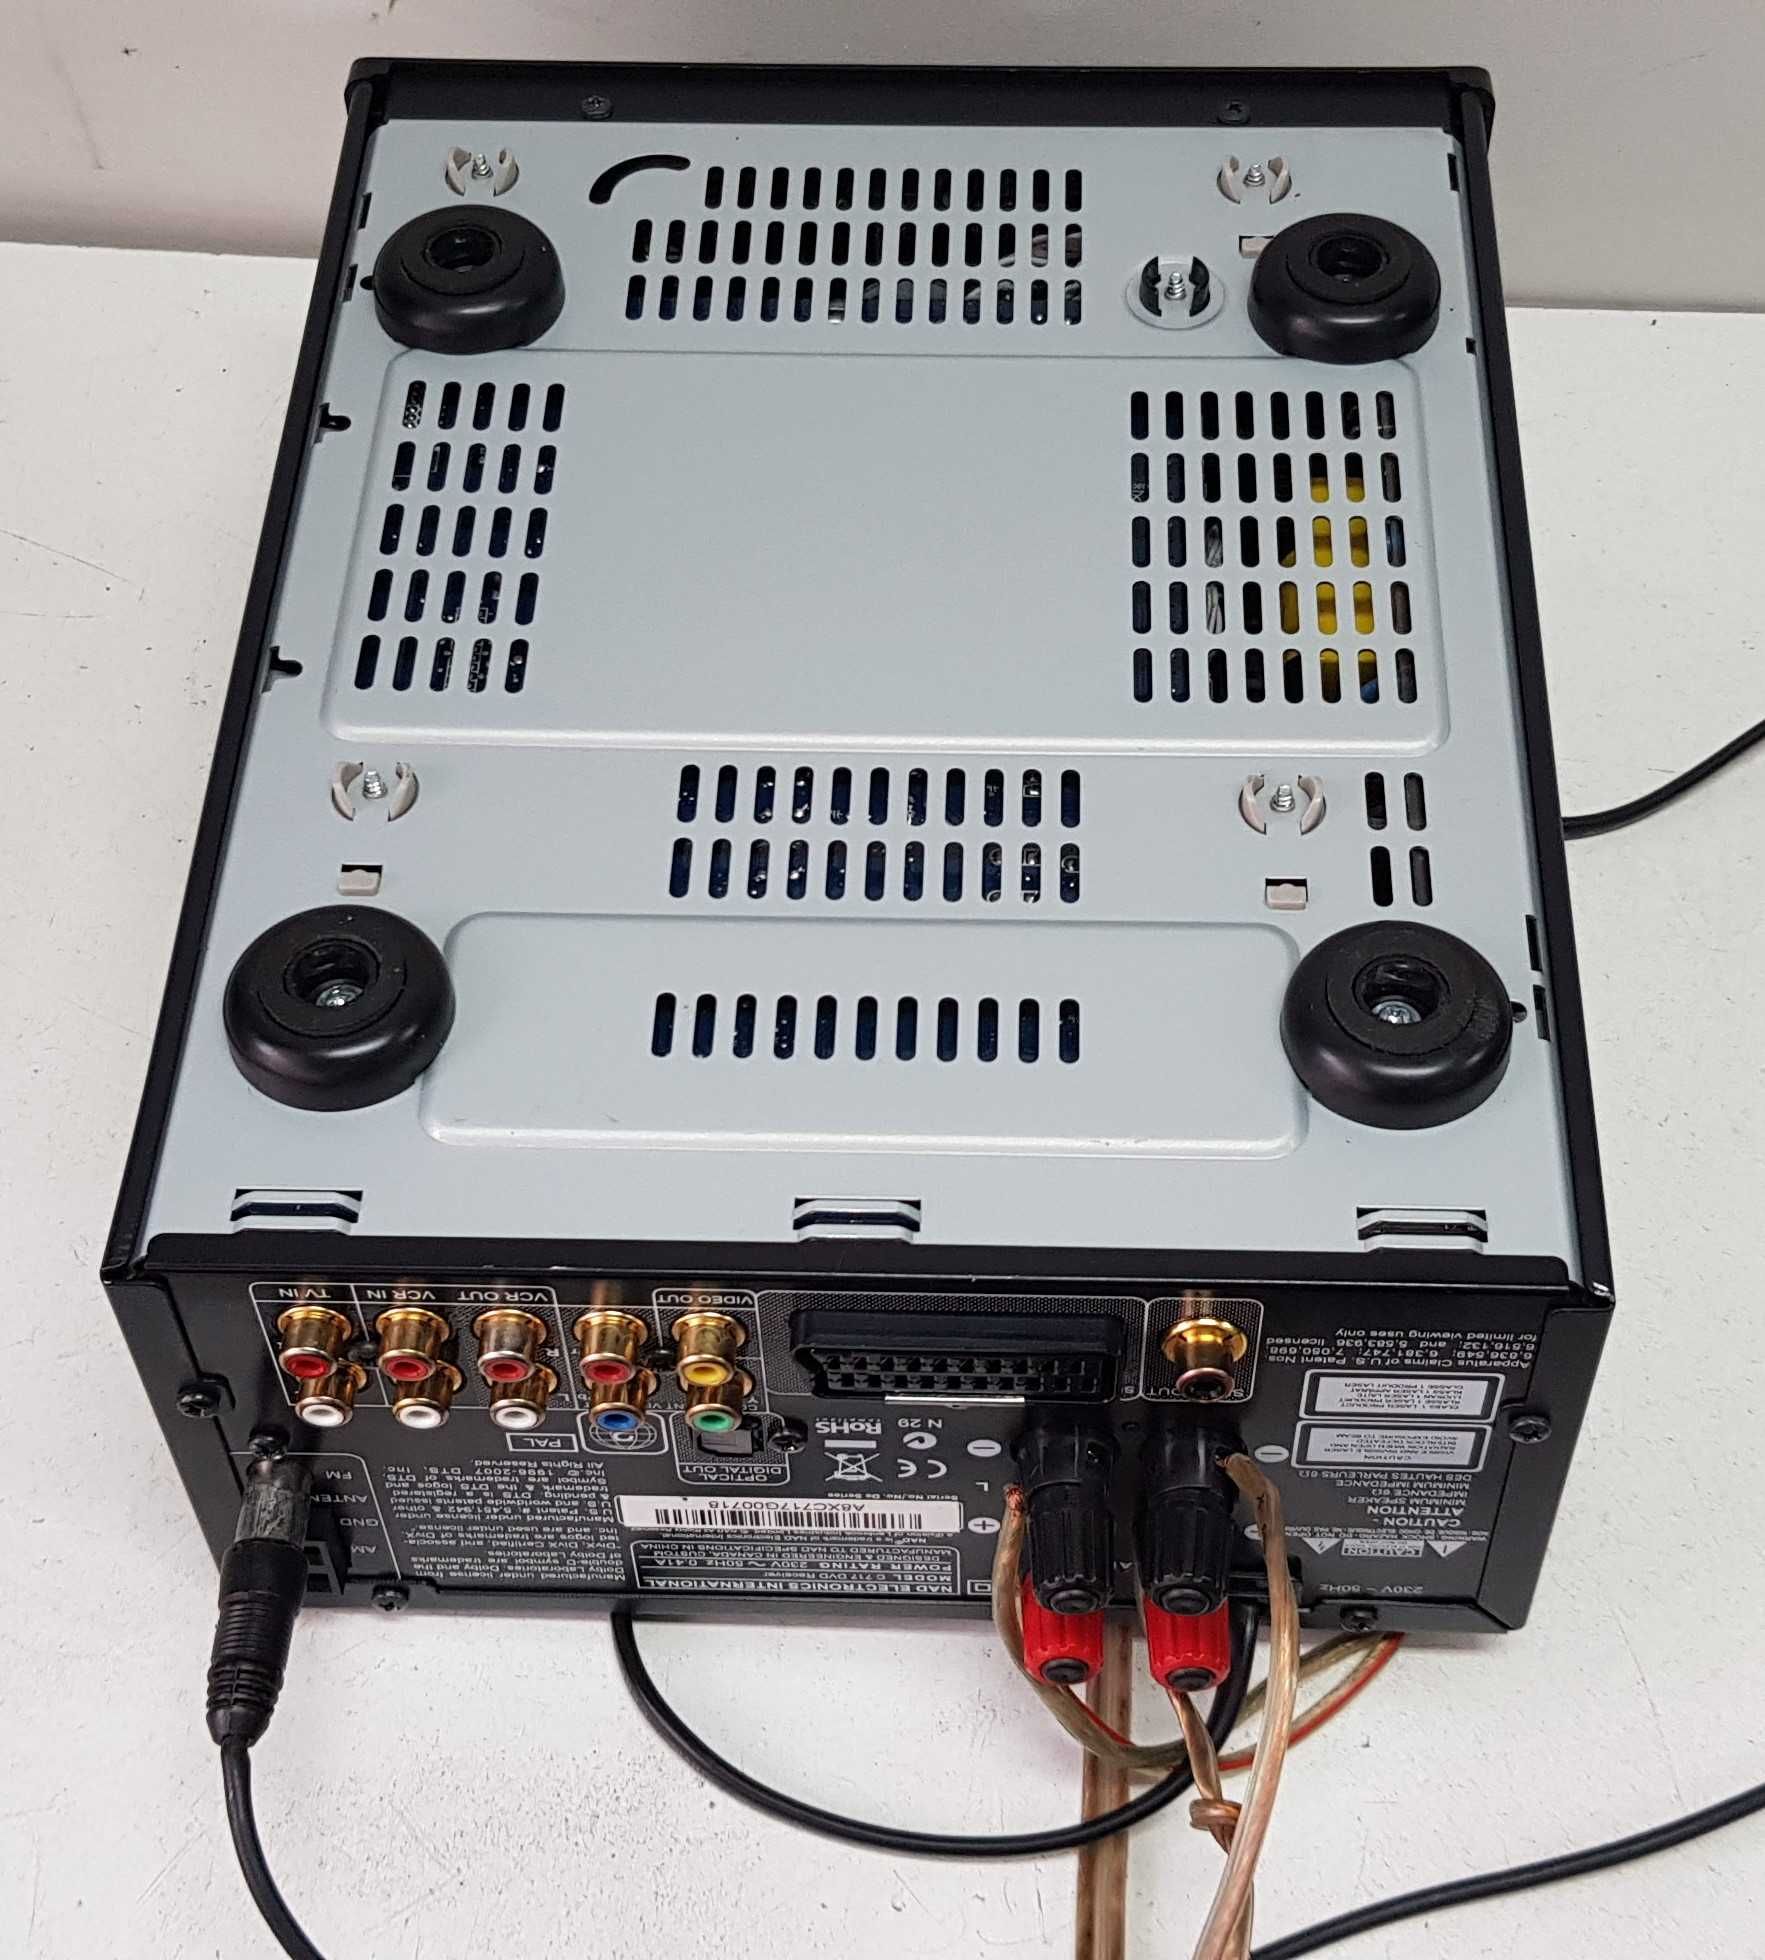 NAD C 717 amplificator DVD receiver muzica filme arta colectie